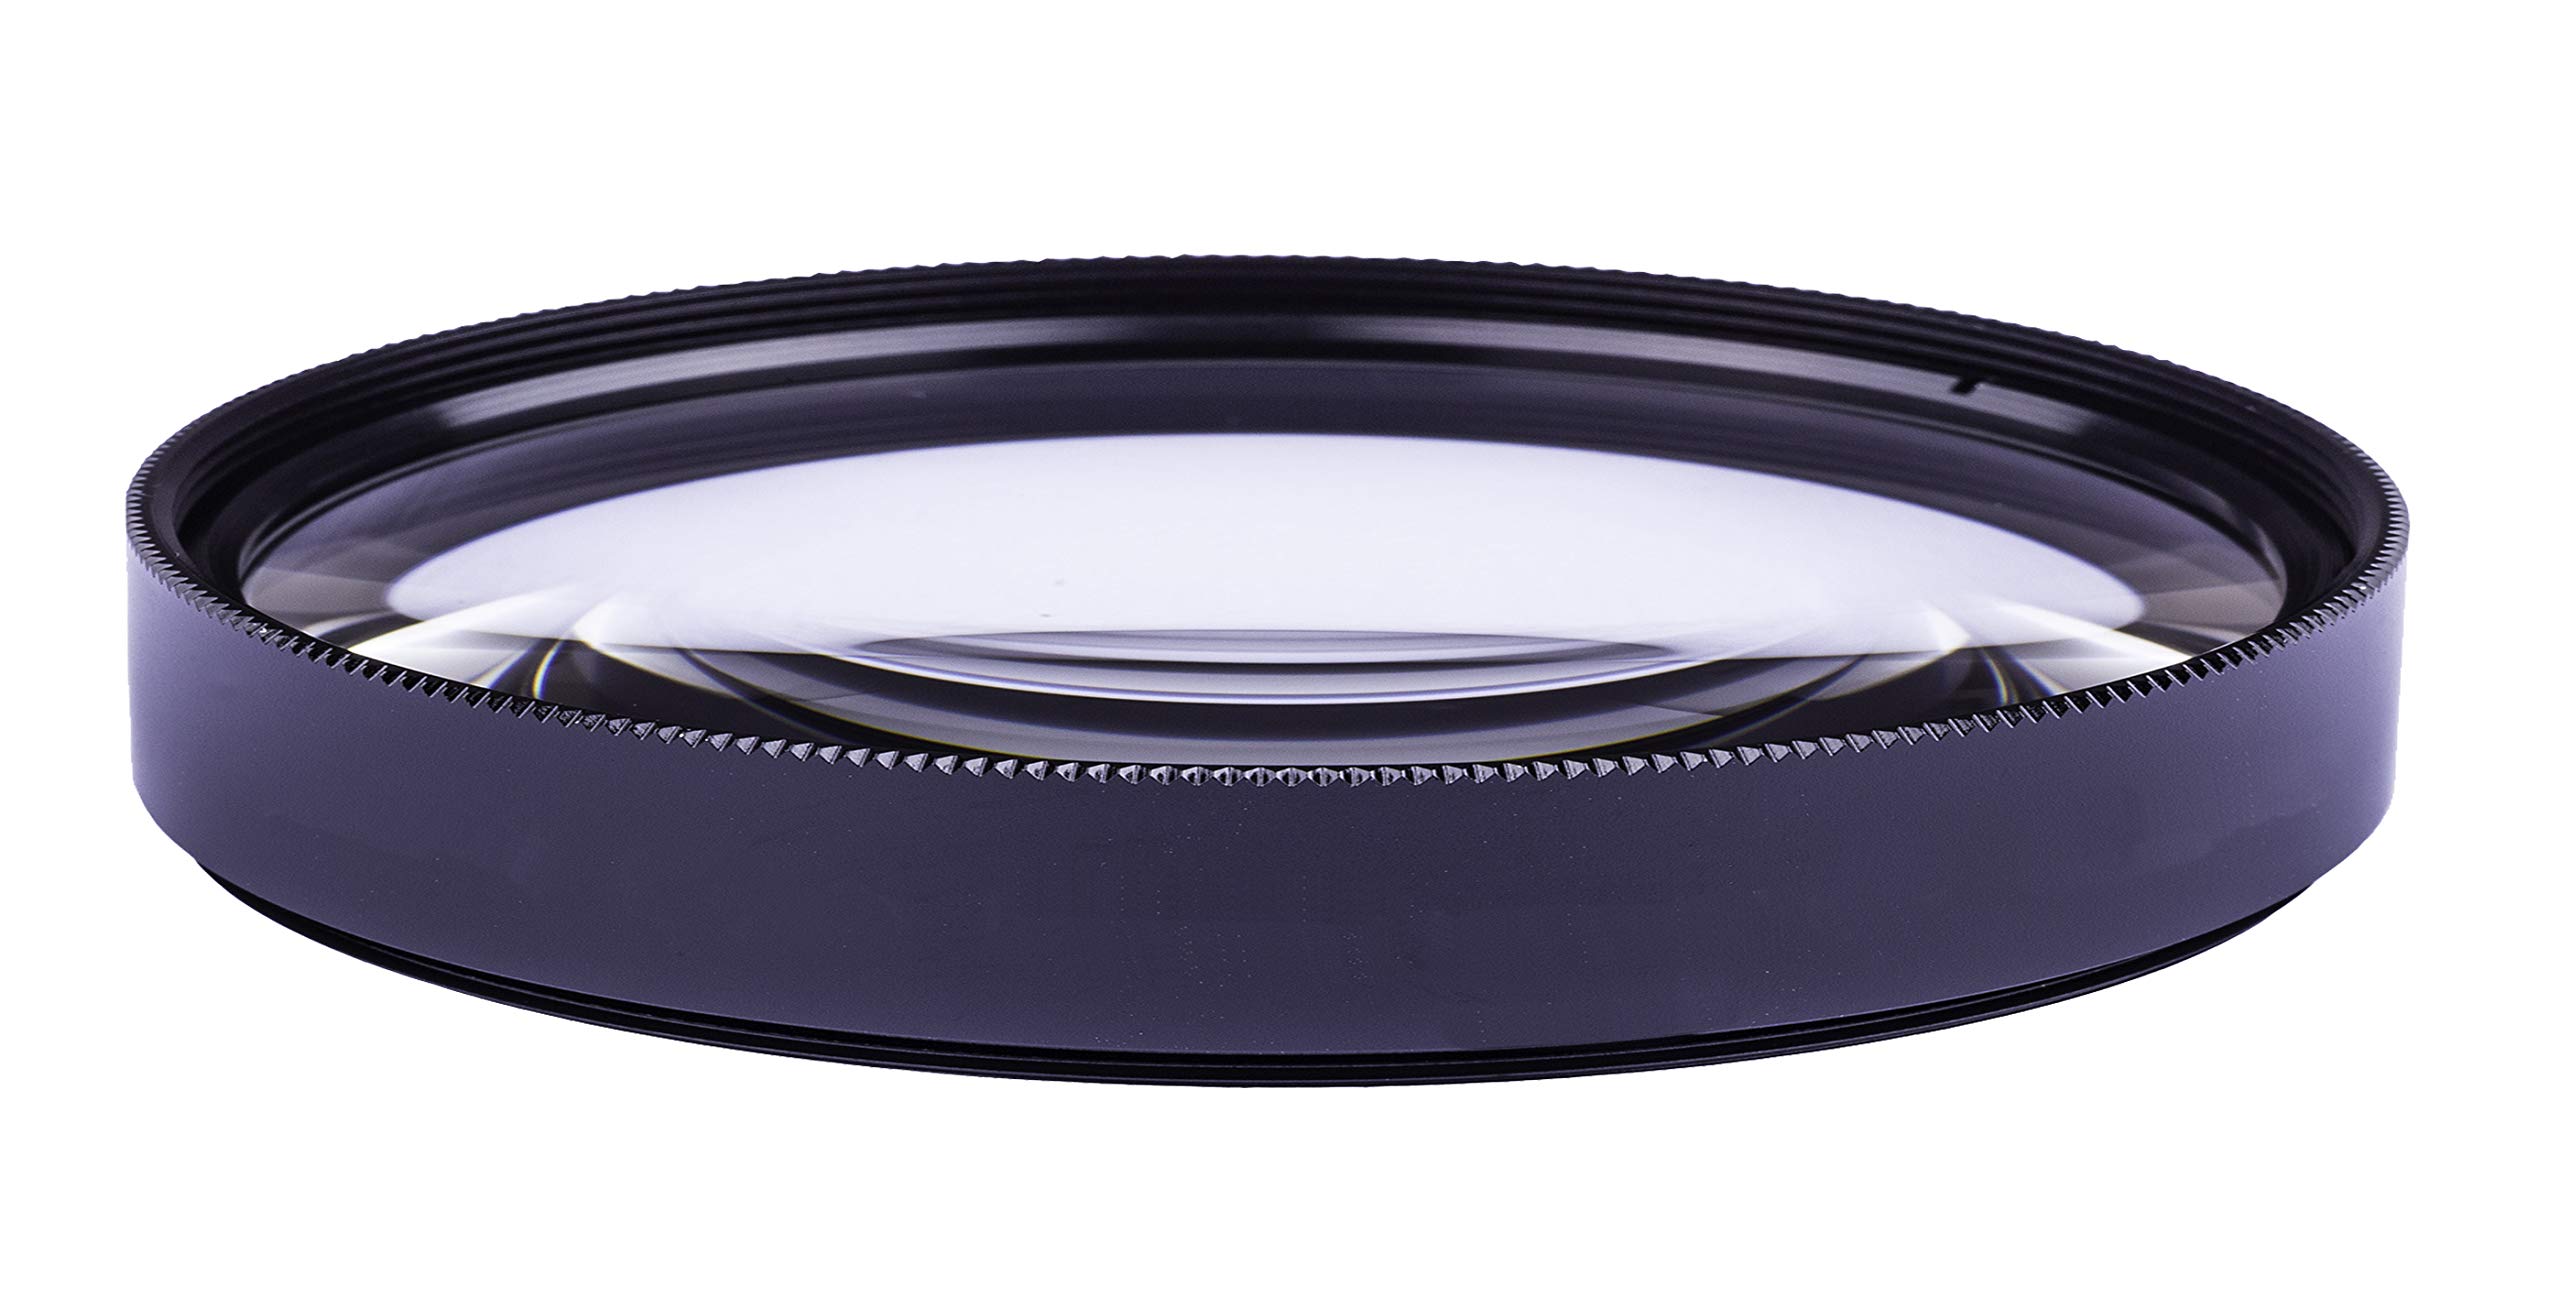 10x High Definition 2 Element Close-Up (Macro) Lens for Nikon, Canon, Sony, Panasonic, Fujifilm, Pentax & Olympus DSLR's (62mm)